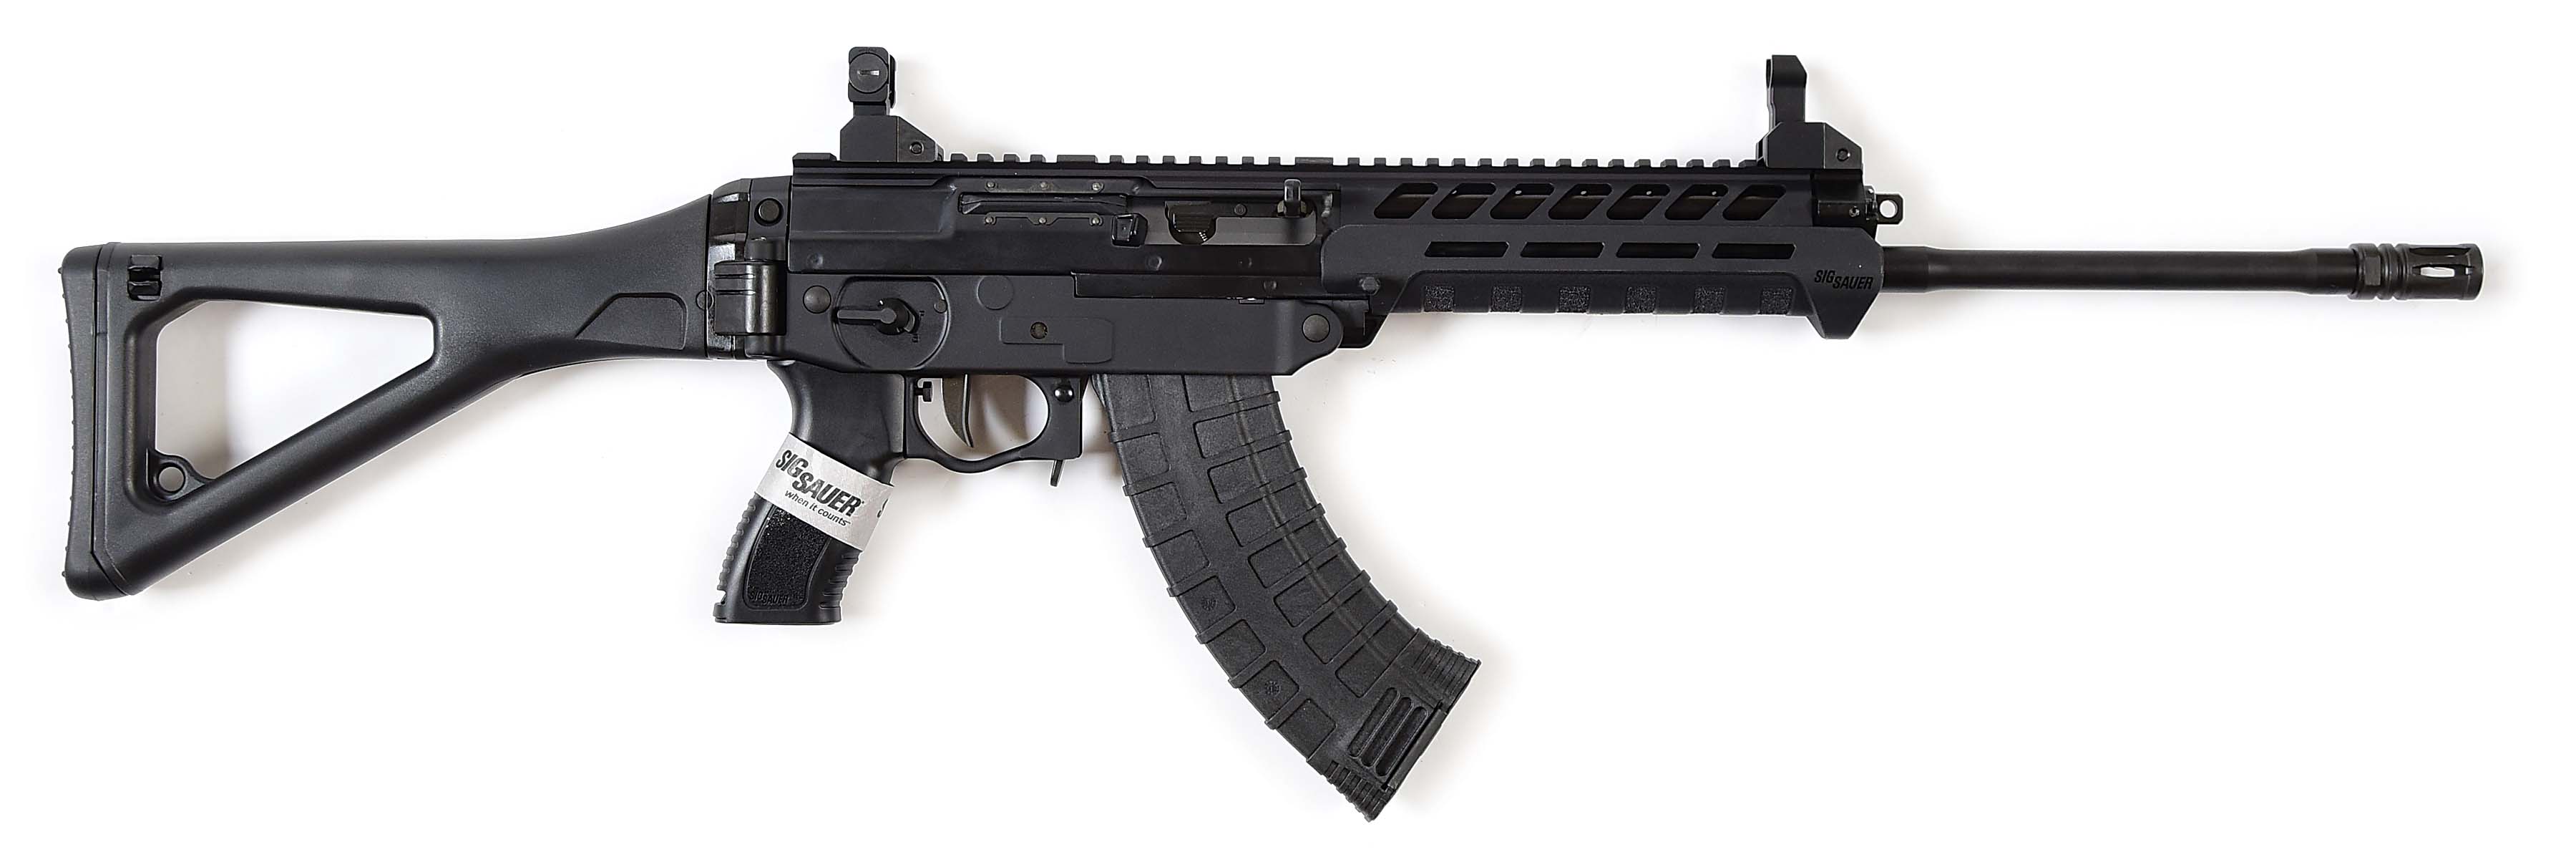 The SIG Sauer 556xi standard semiautomatic tactical rifle has a 16" ba...